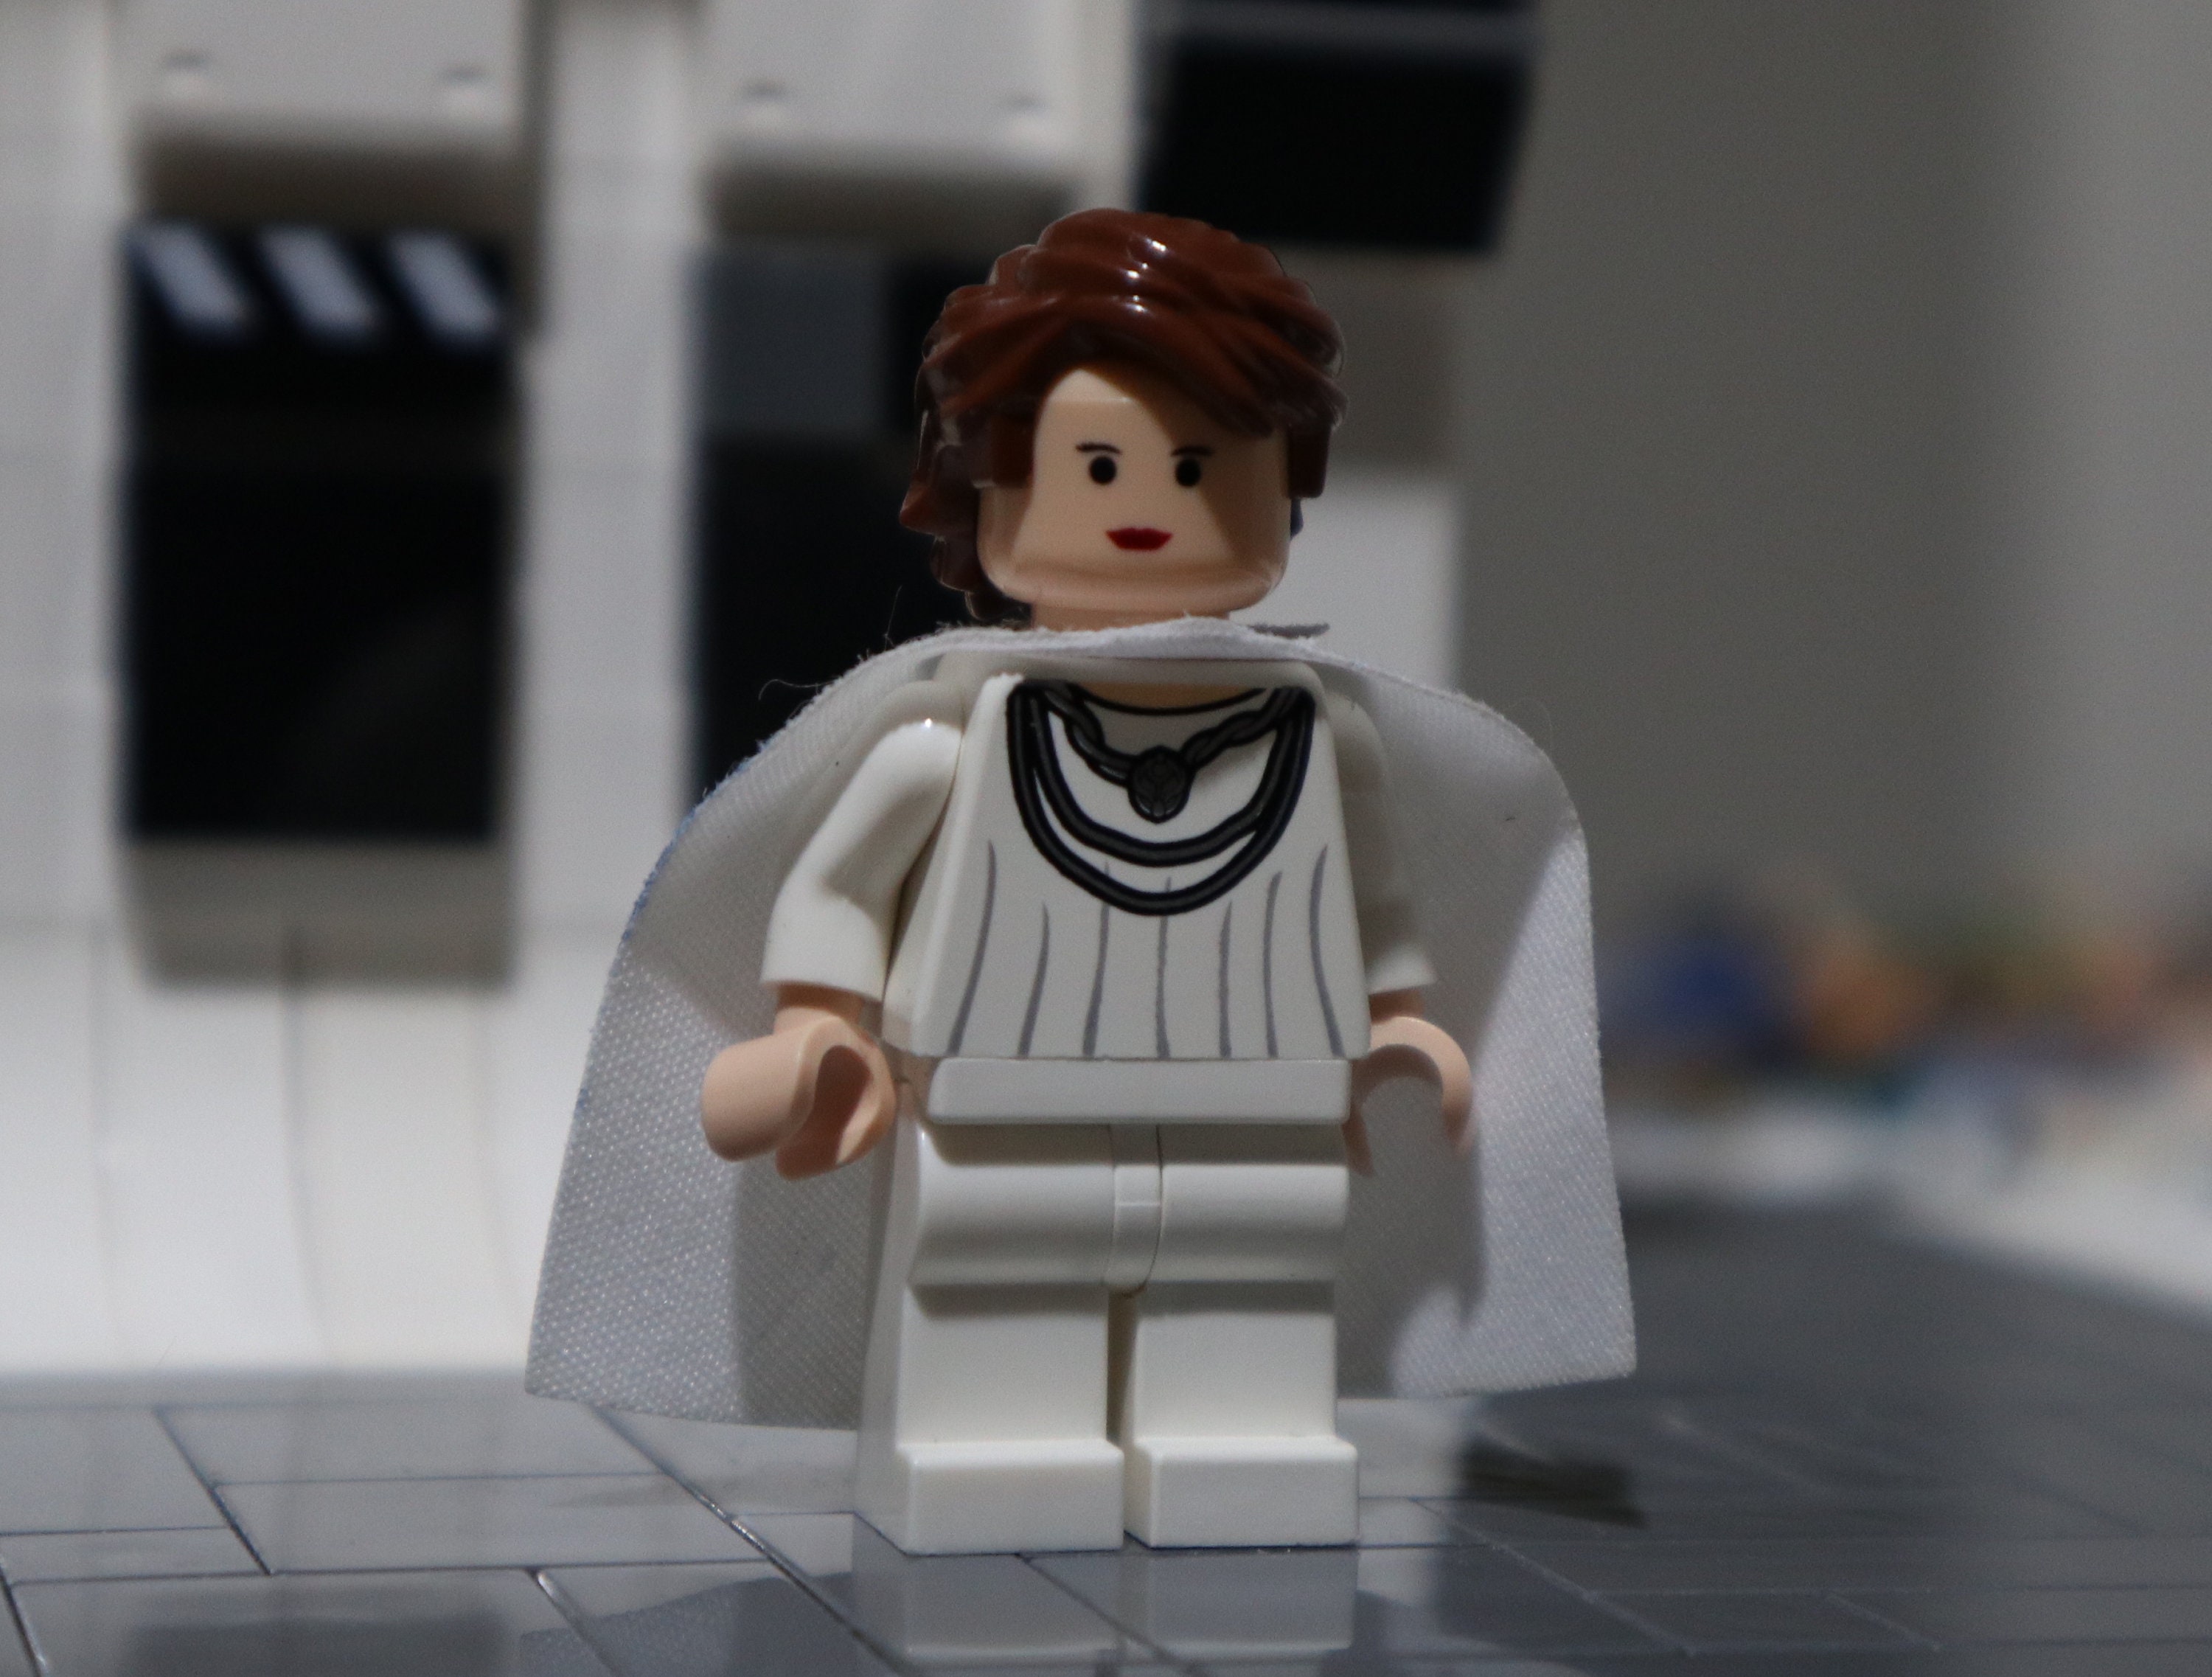 New Lego Star Wars Mon Mothma Minifigure | Etsy